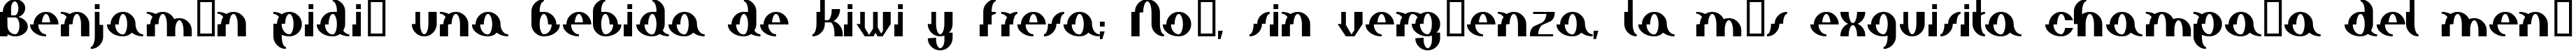 Пример написания шрифтом Elephant man текста на испанском